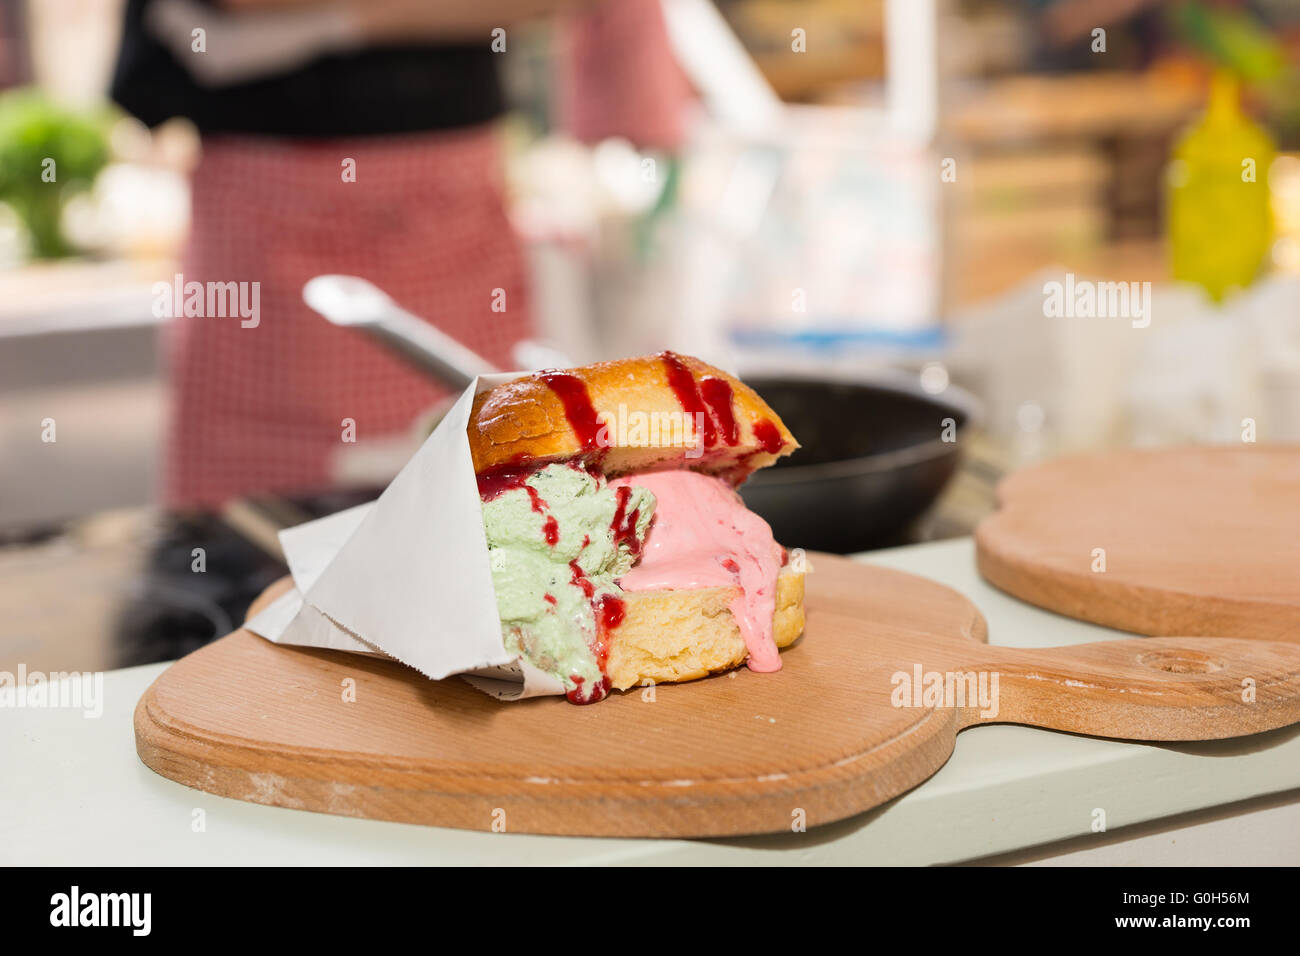 https://c8.alamy.com/comp/G0H56M/close-up-still-life-of-gourmet-double-scoop-ice-cream-sandwich-with-G0H56M.jpg